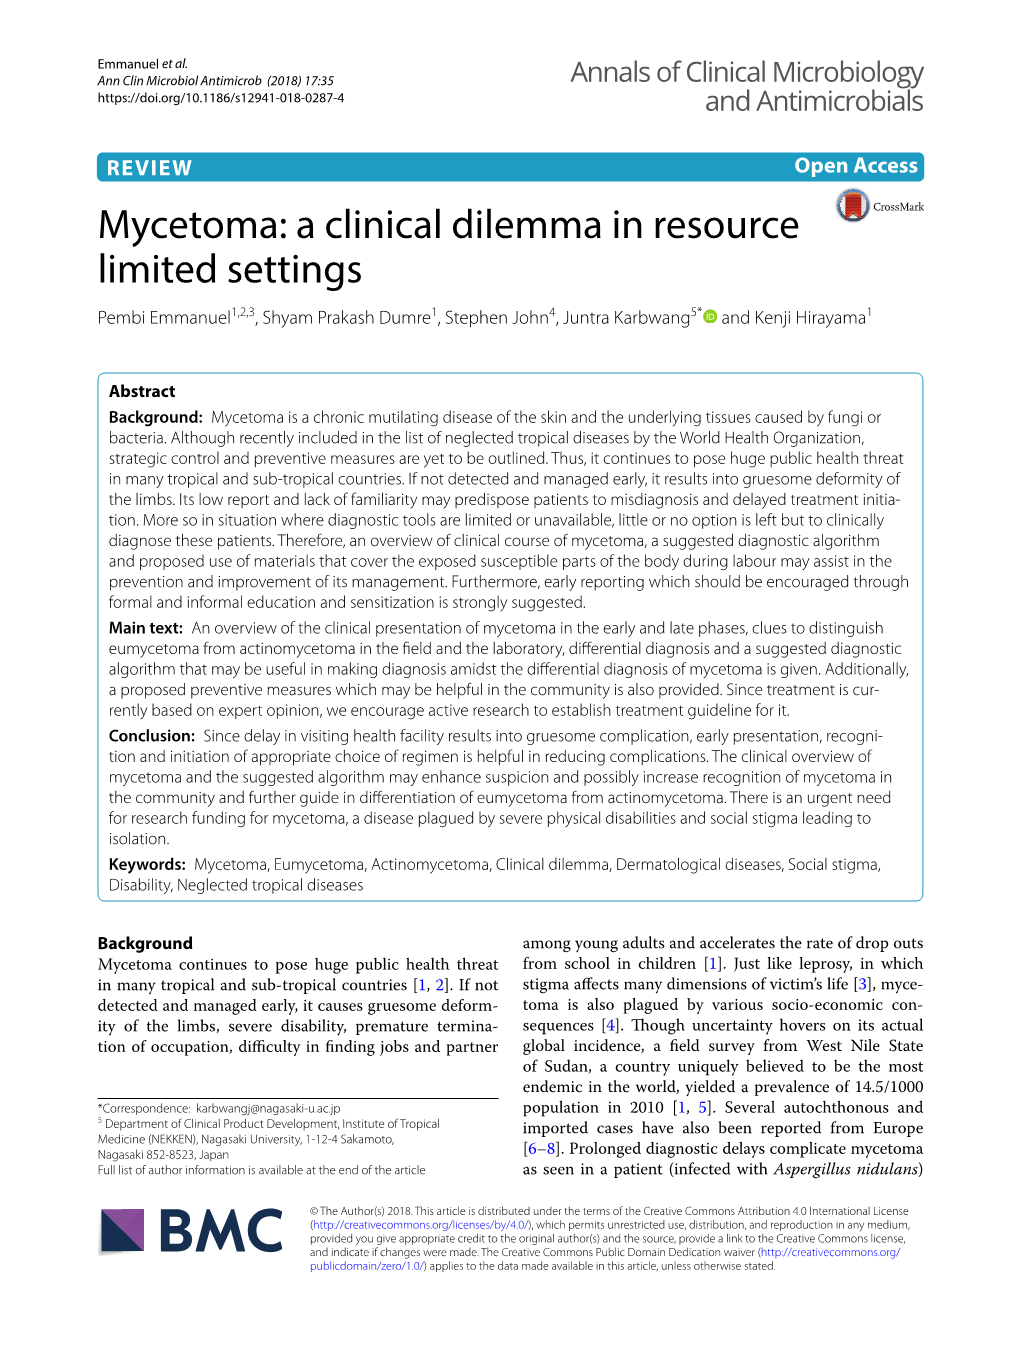 Mycetoma: a Clinical Dilemma in Resource Limited Settings Pembi Emmanuel1,2,3, Shyam Prakash Dumre1, Stephen John4, Juntra Karbwang5* and Kenji Hirayama1